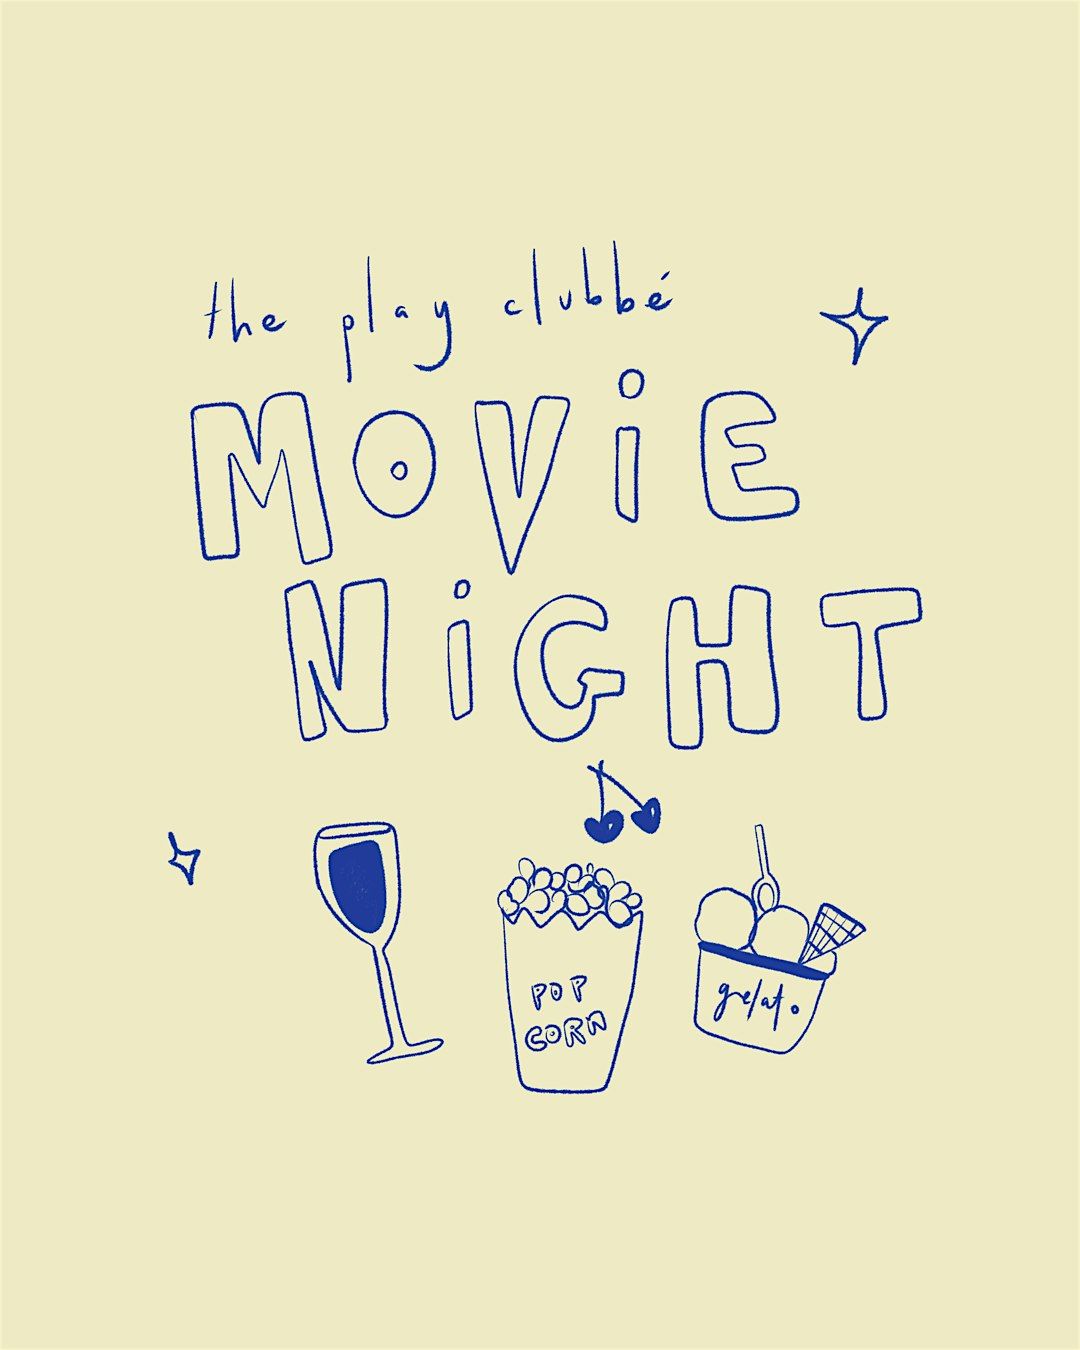 Movie Night @ The Play Clubb\u00e9